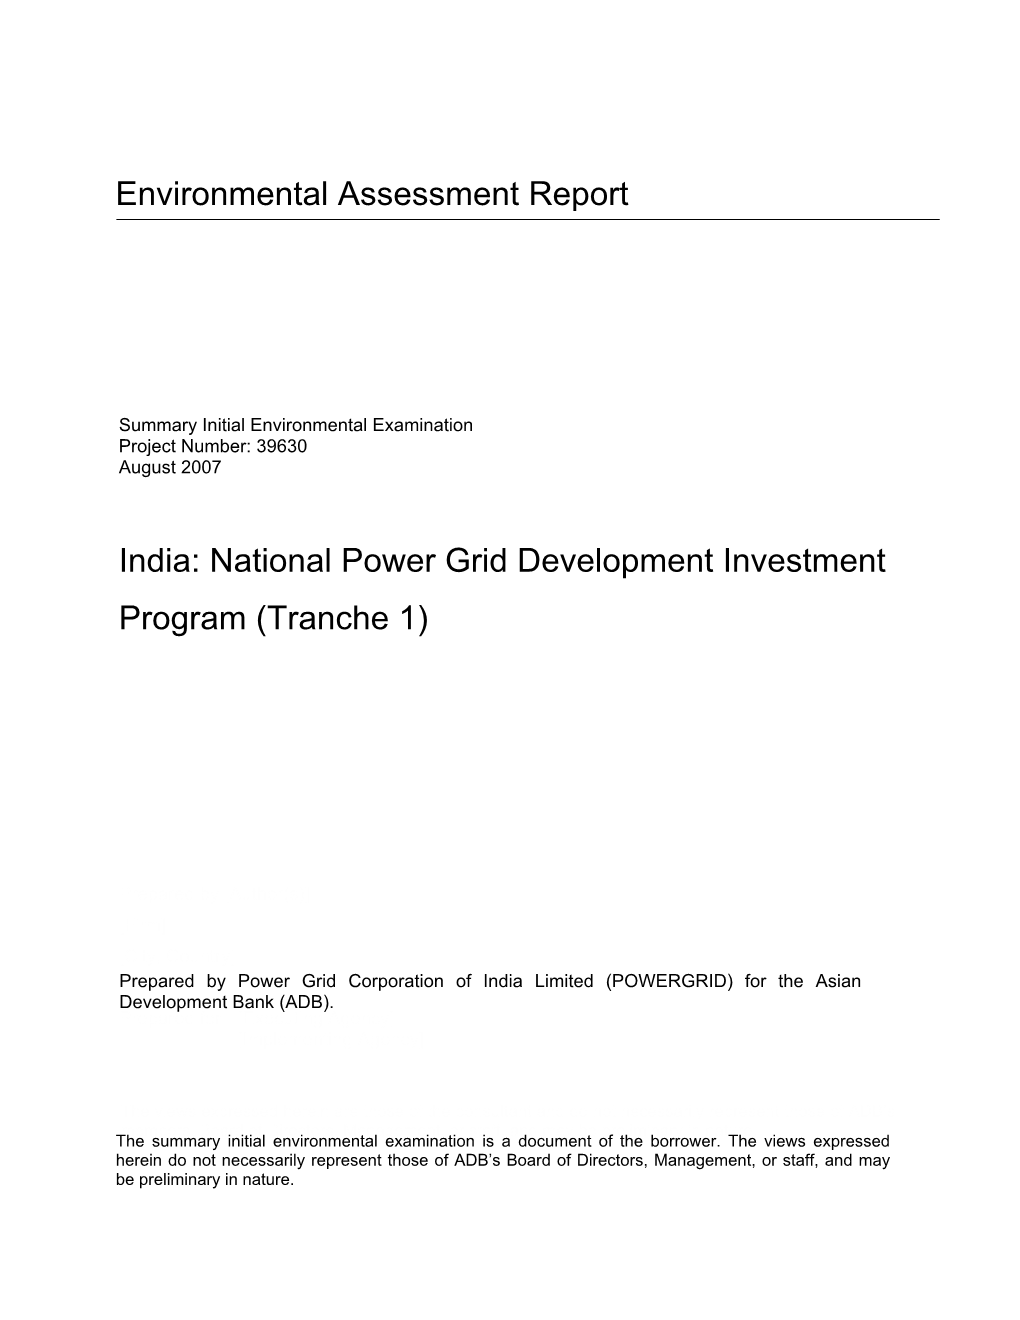 National Power Grid Development Investment Program (Tranche 1)